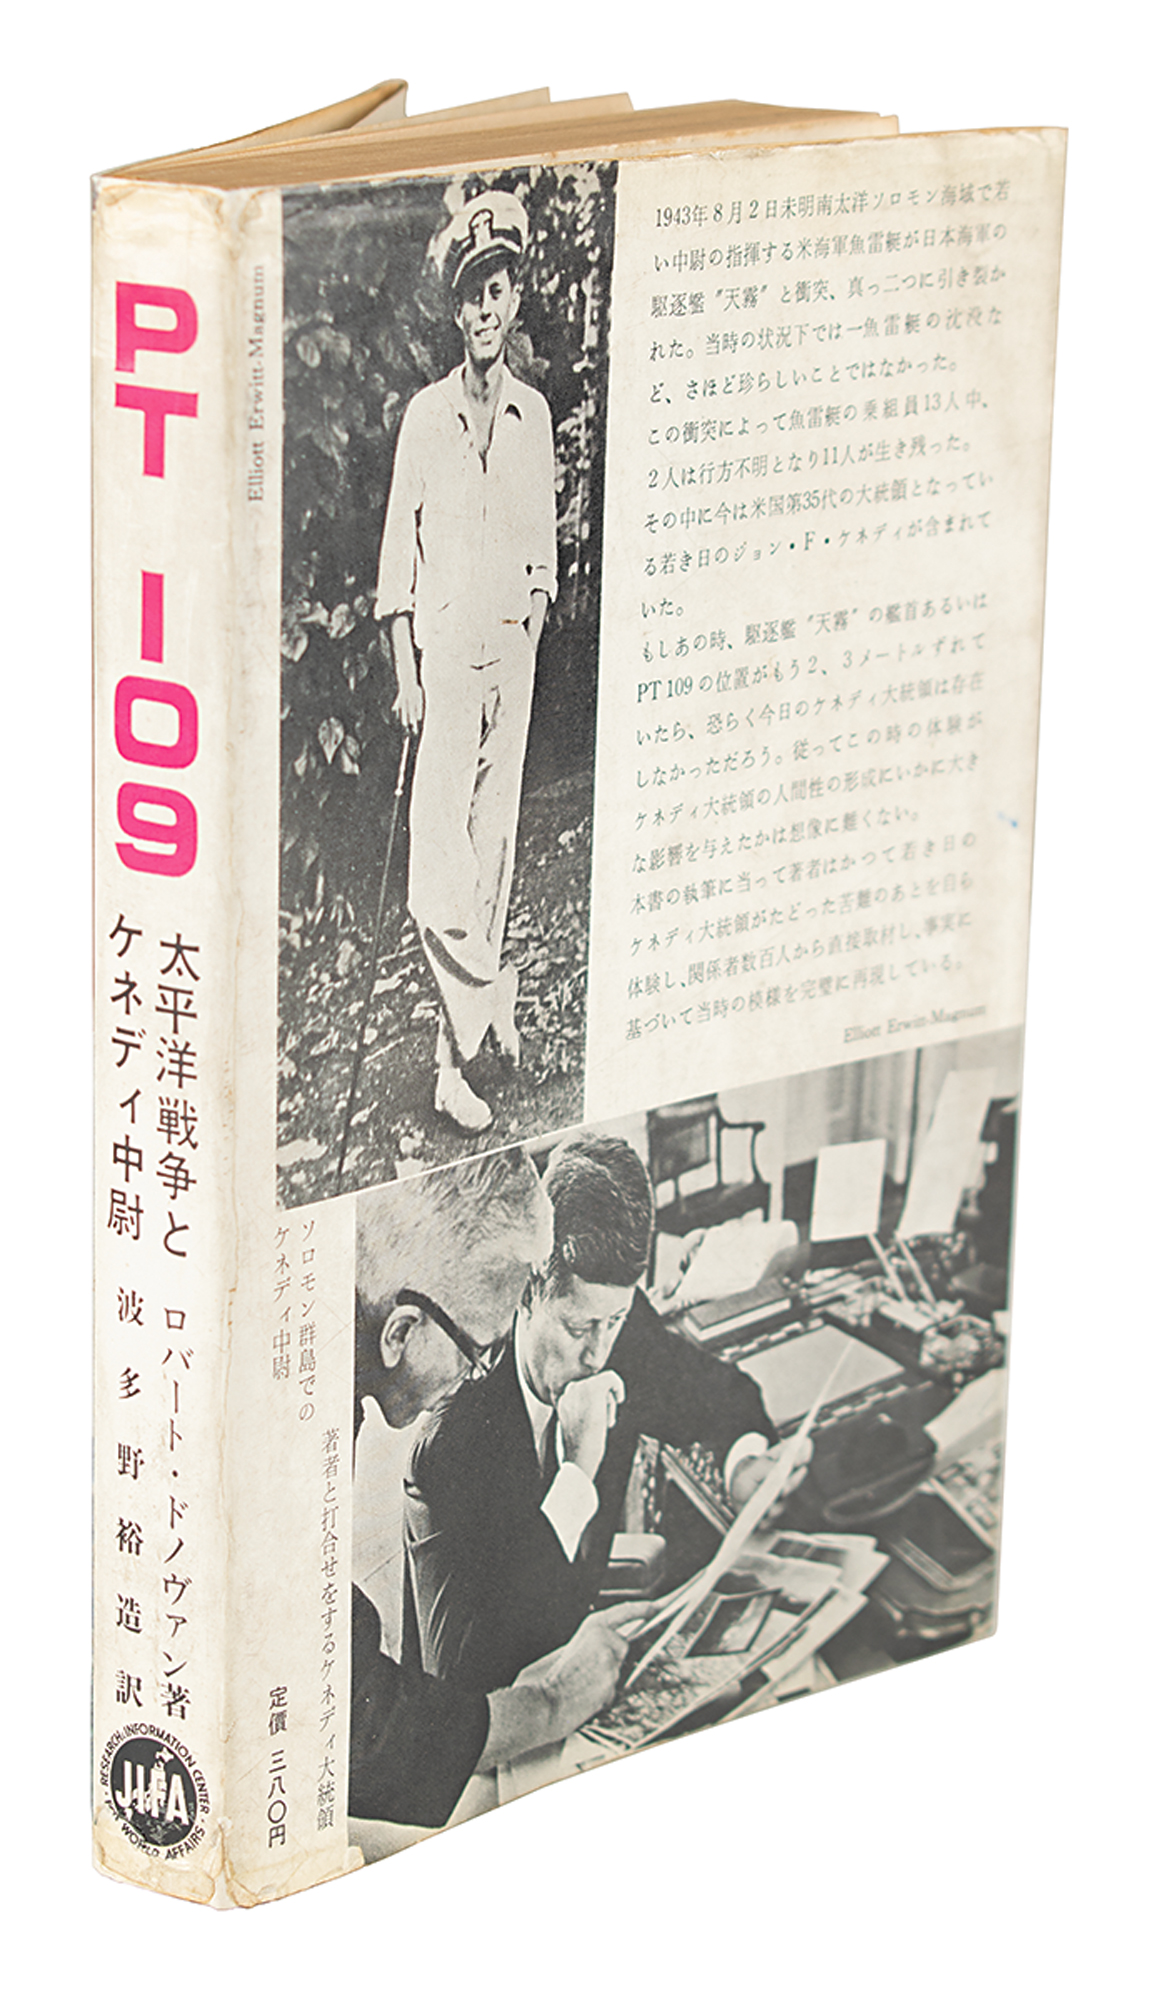 Lot #66 John F. Kennedy: Katsumori Yamashiro Hand-Annotated Book